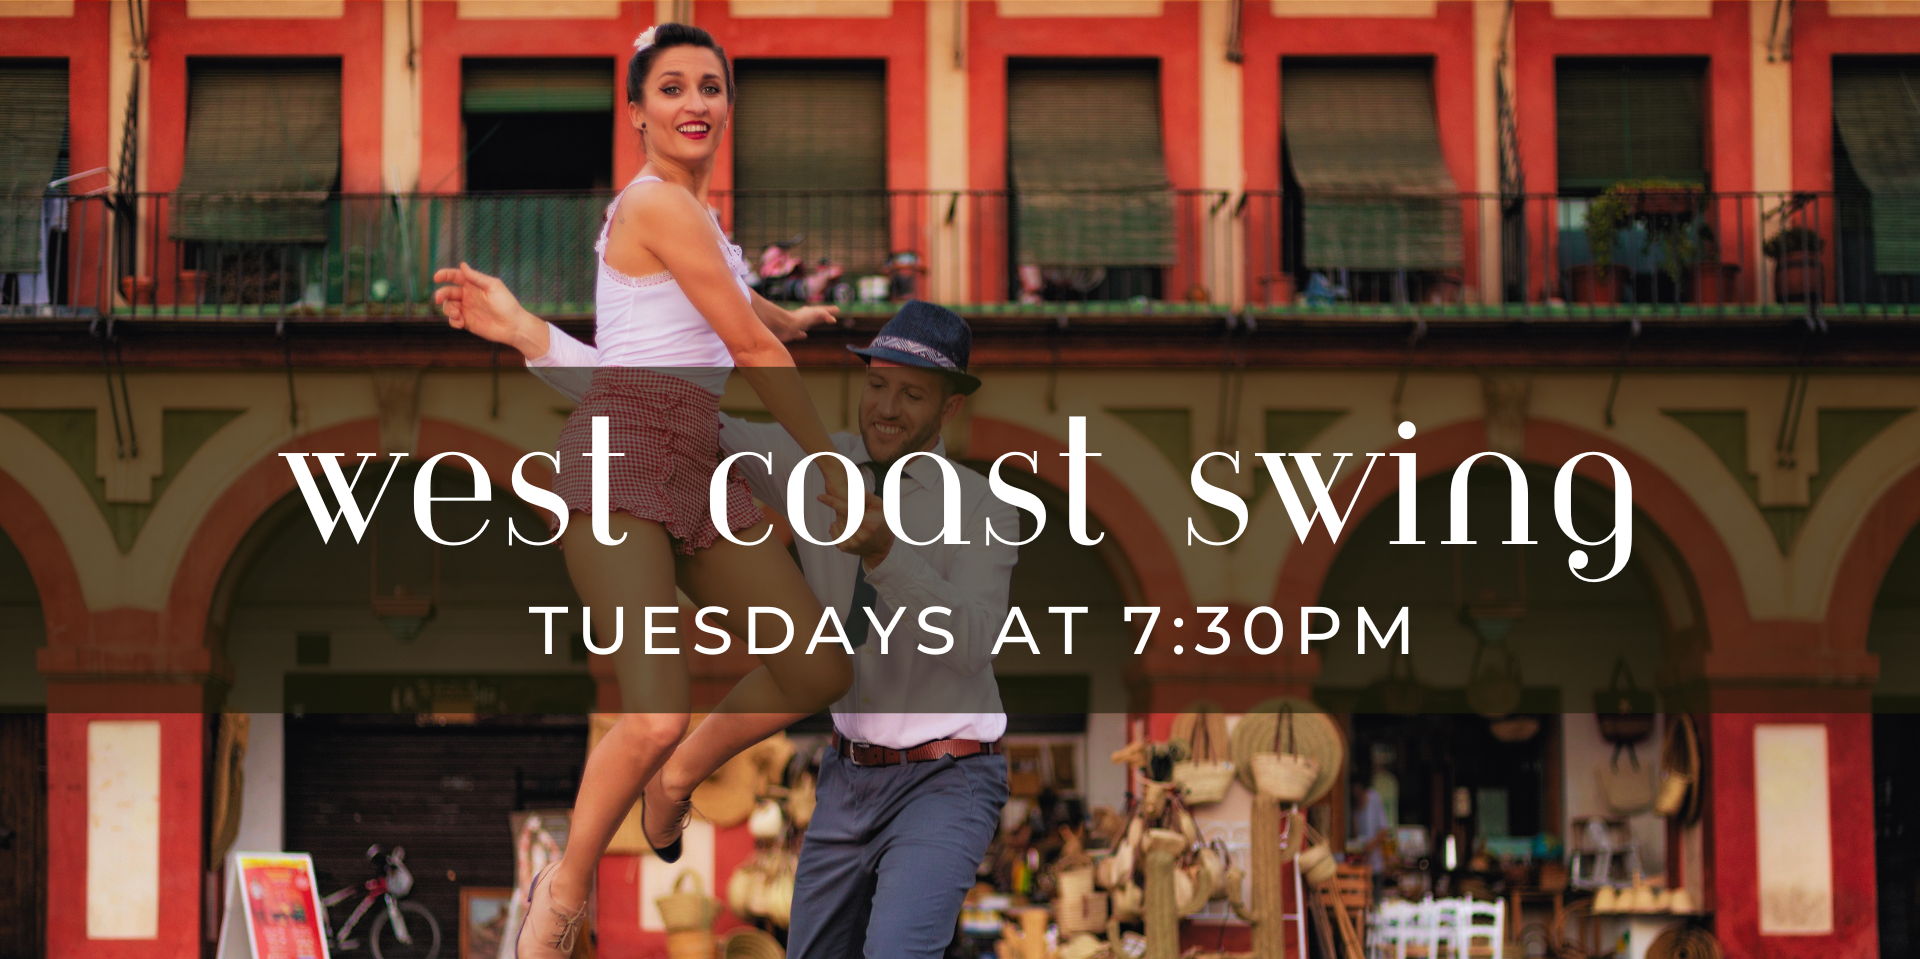 West Coast Swing Dance Class promotional image